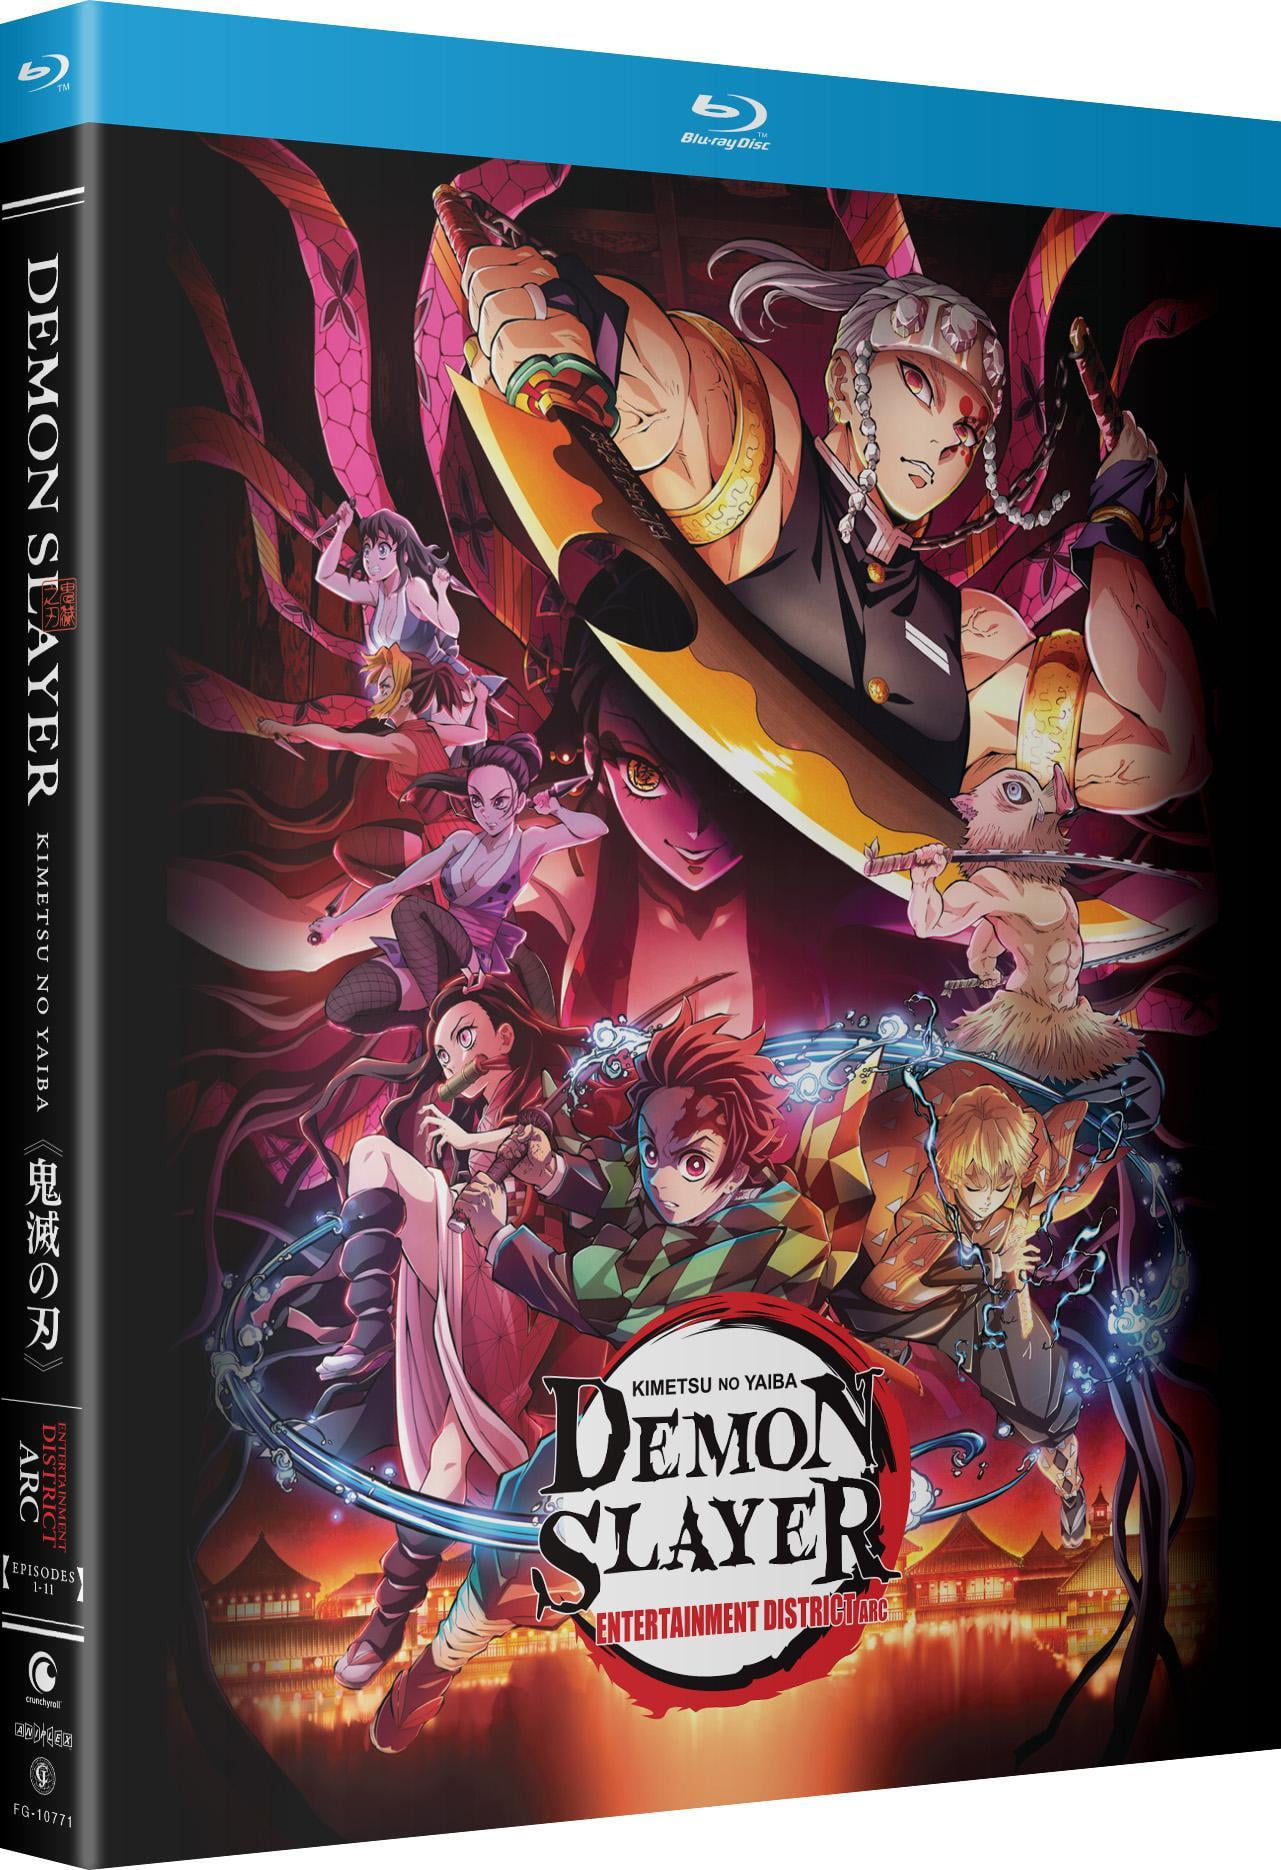 Demon Slayer Kimetsu no Yaiba Mugen Train Arc Limited Edition Blu-ray